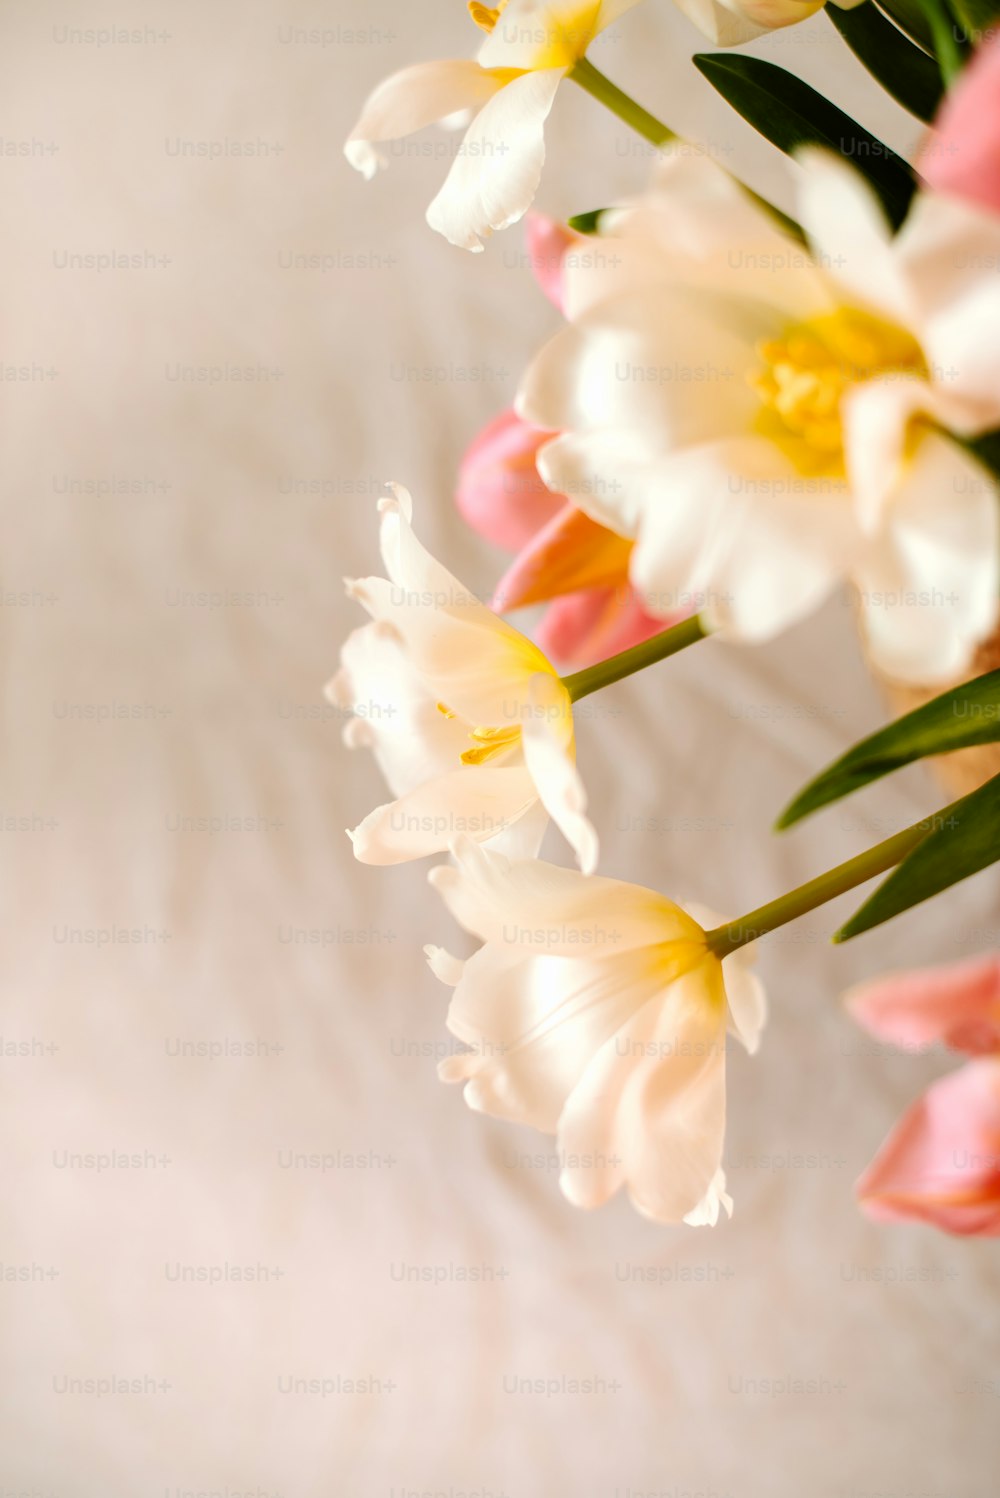 Flower Decor Pictures  Download Free Images on Unsplash